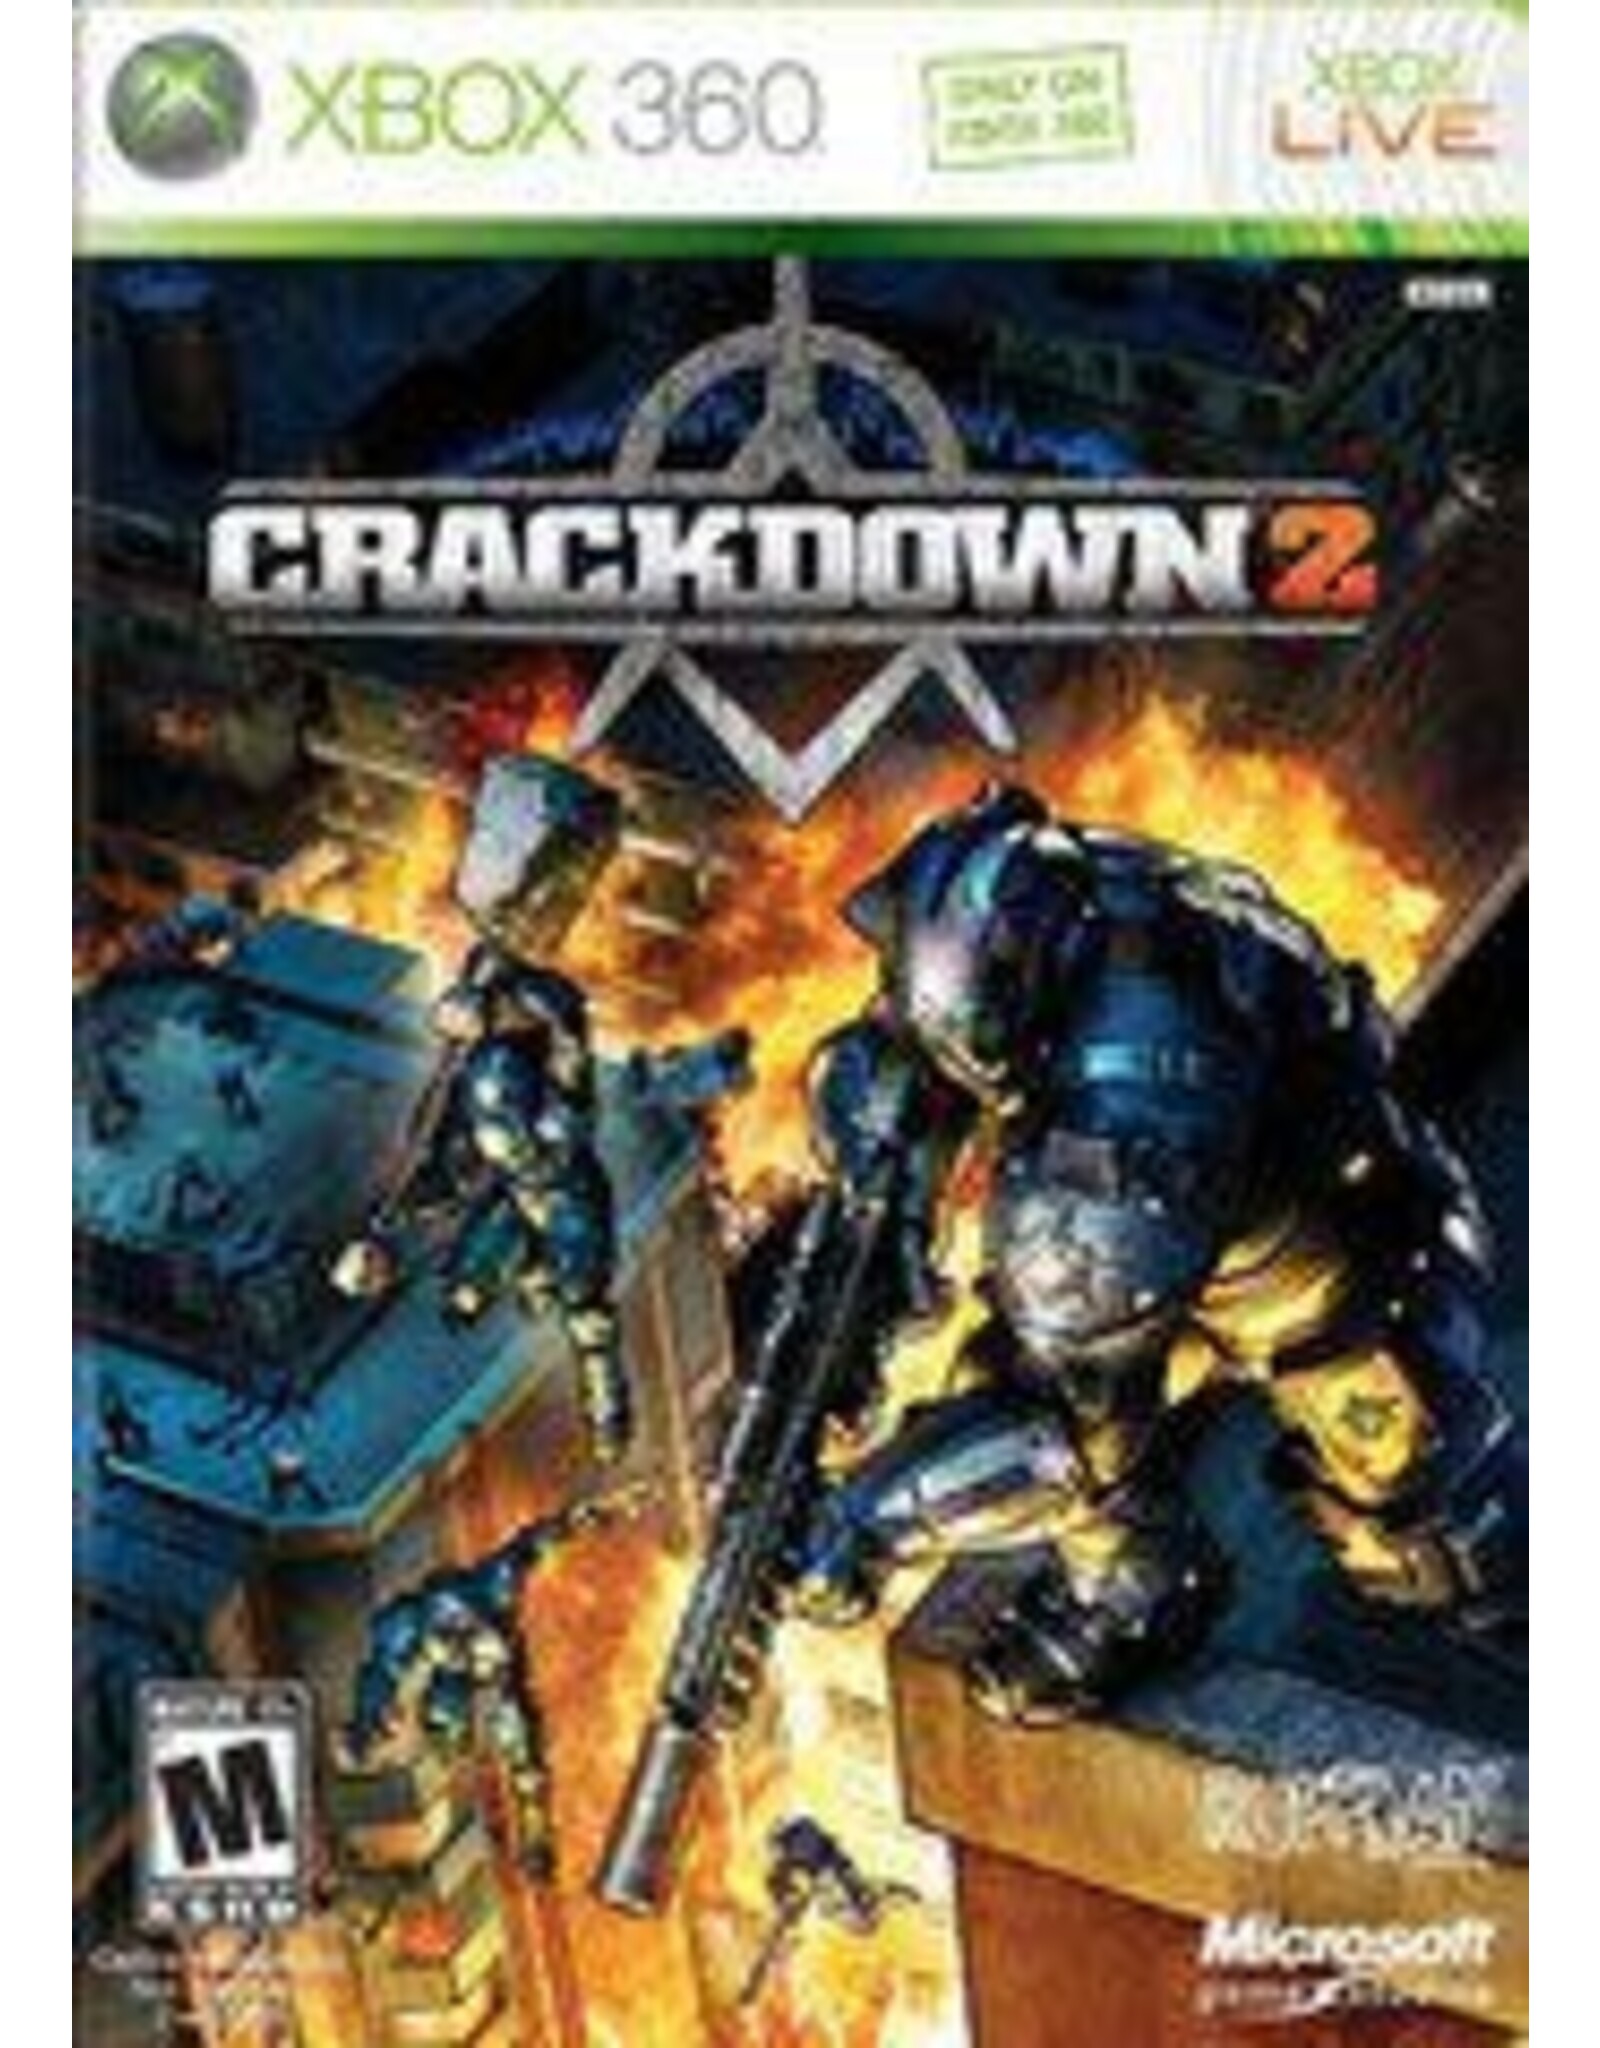 Xbox 360 Crackdown 2 (No Manual, Damaged Sleeve)